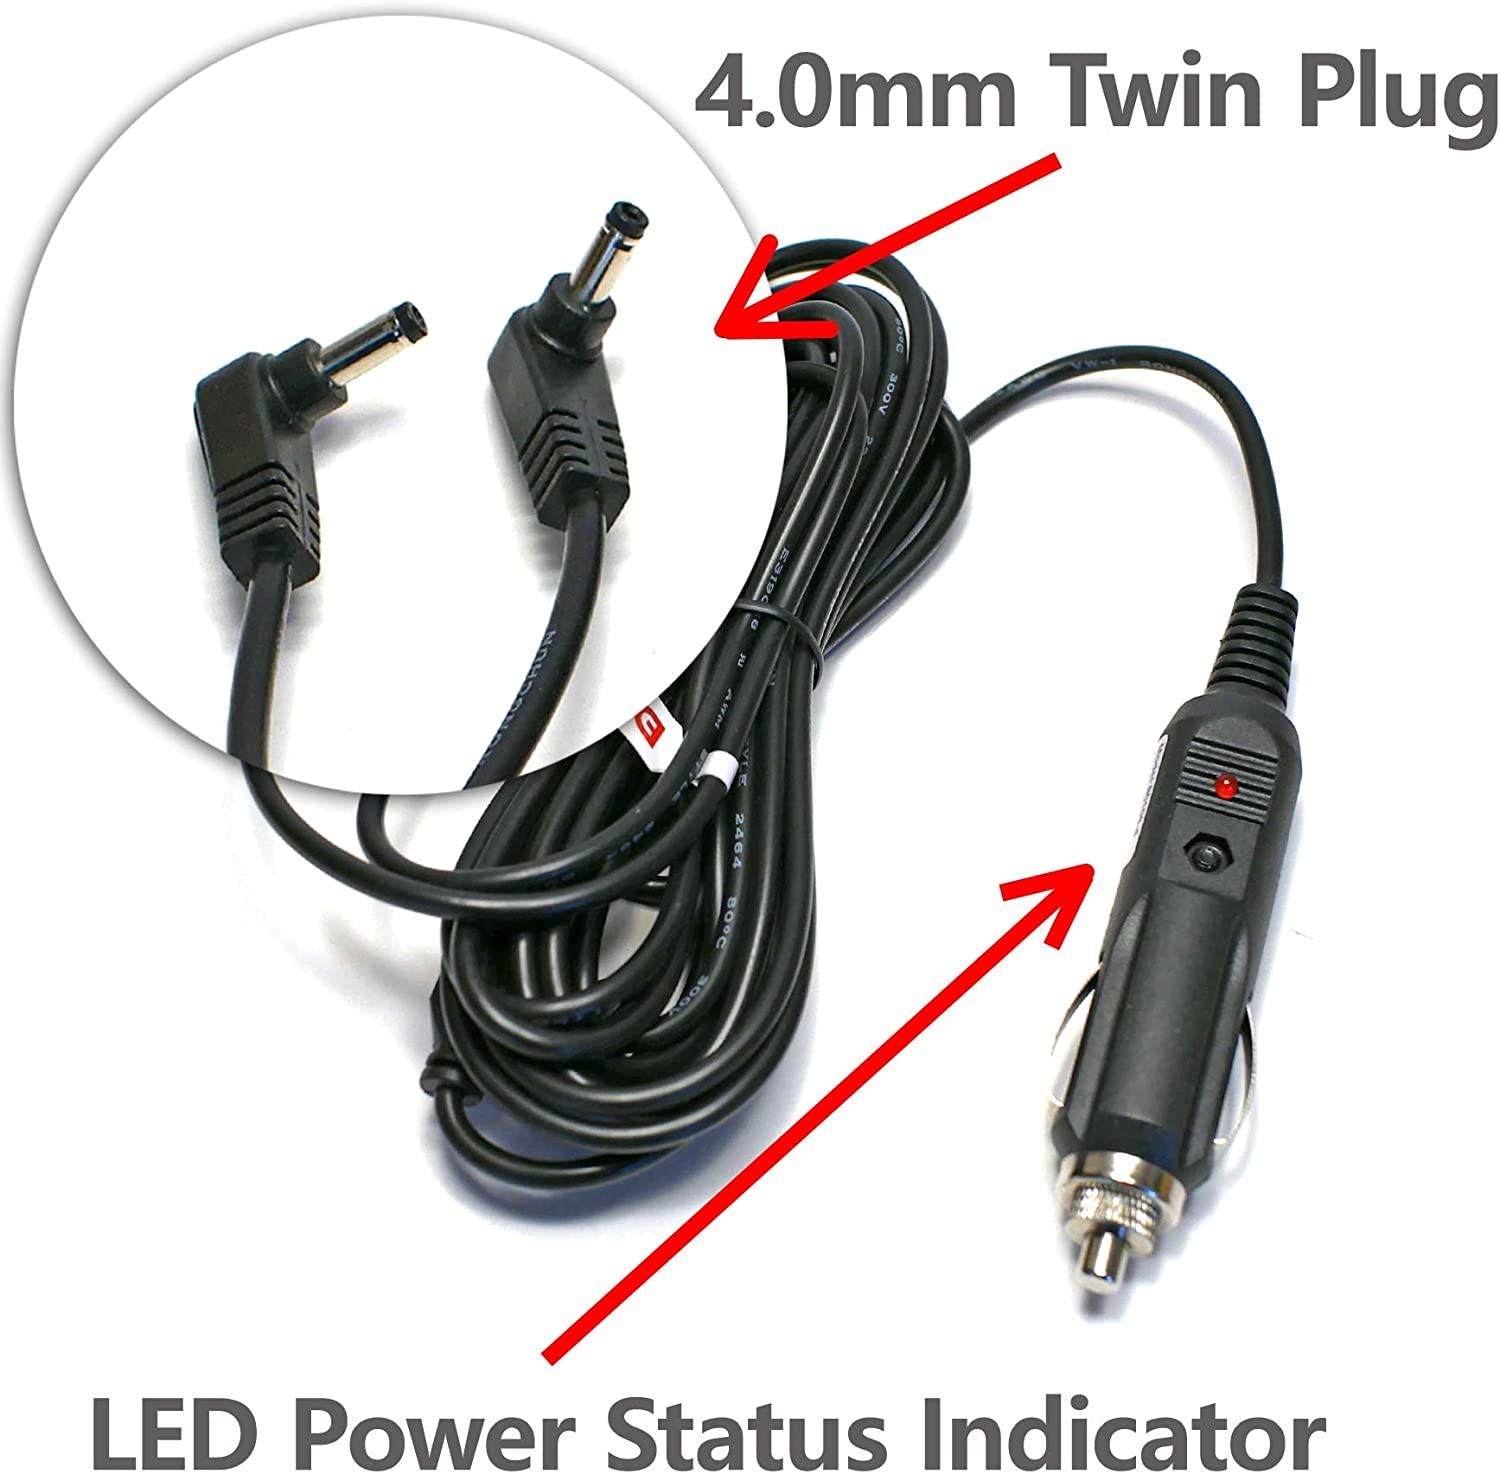 EDOTech, EDO Tech 11' Car Charger Adapter Power Cord for Philips 7 9 10 inches Dual Screen Headrest Portable DVD Player Pet9402/37 Pet708/37 Pd7012/37 Pd9012/37 Pd9016/37